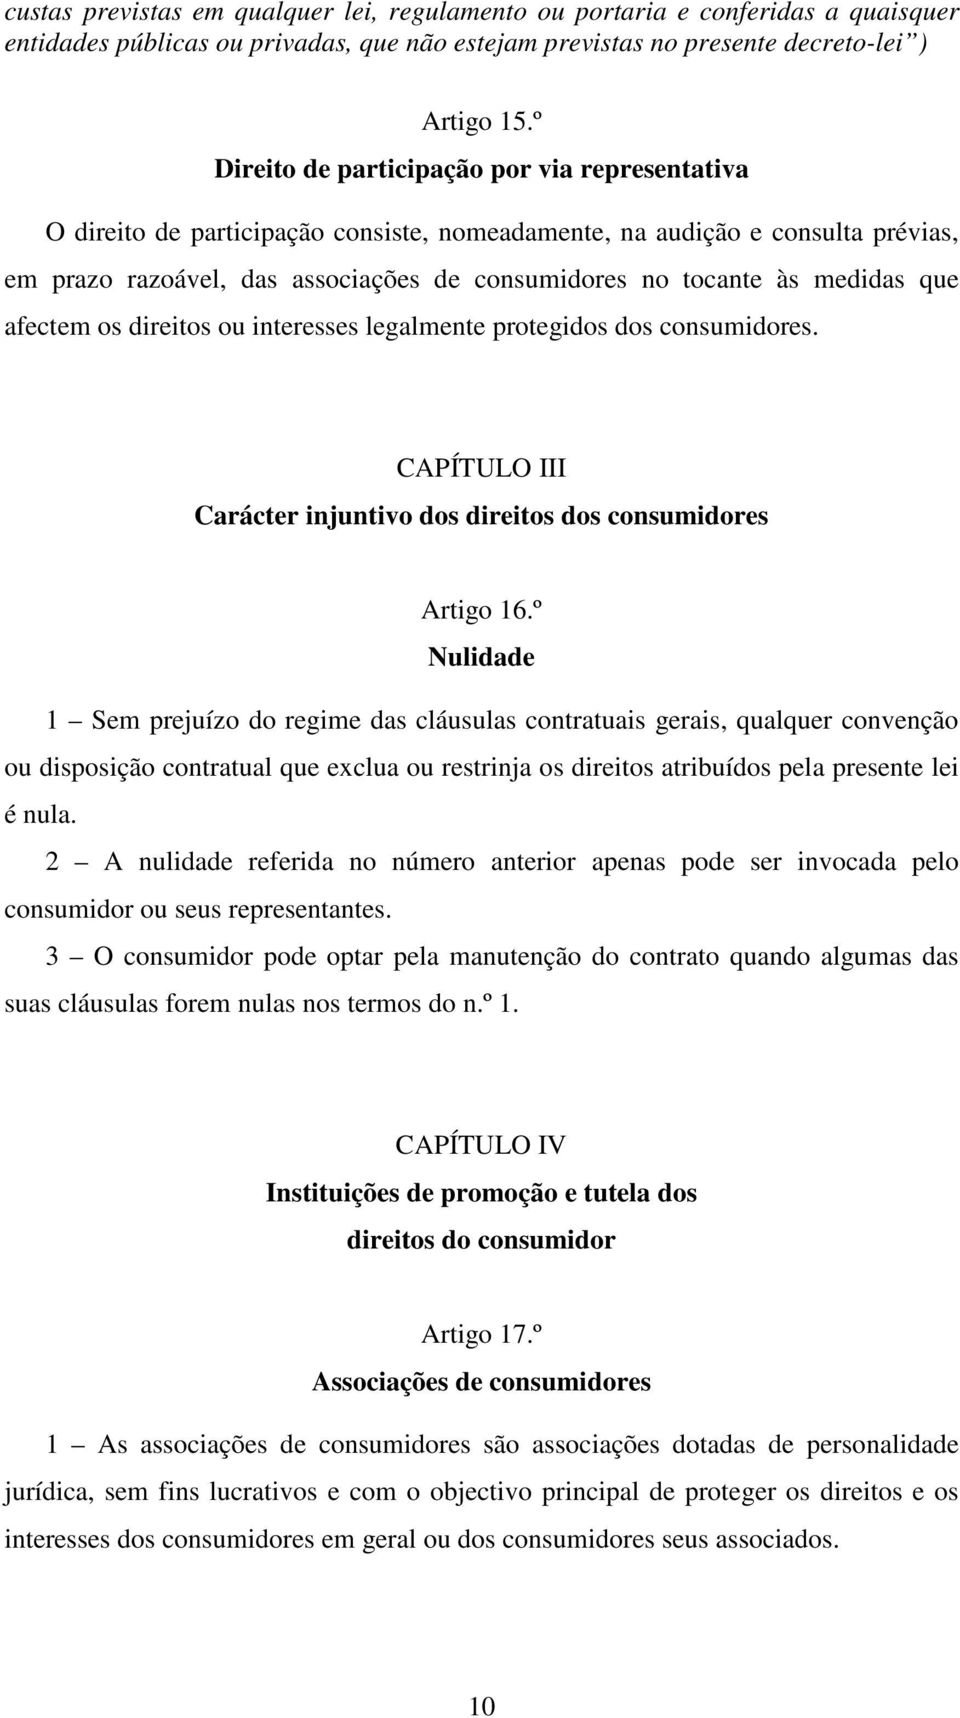 medidas que afectem os direitos ou interesses legalmente protegidos dos consumidores. CAPÍTULO III Carácter injuntivo dos direitos dos consumidores Artigo 16.